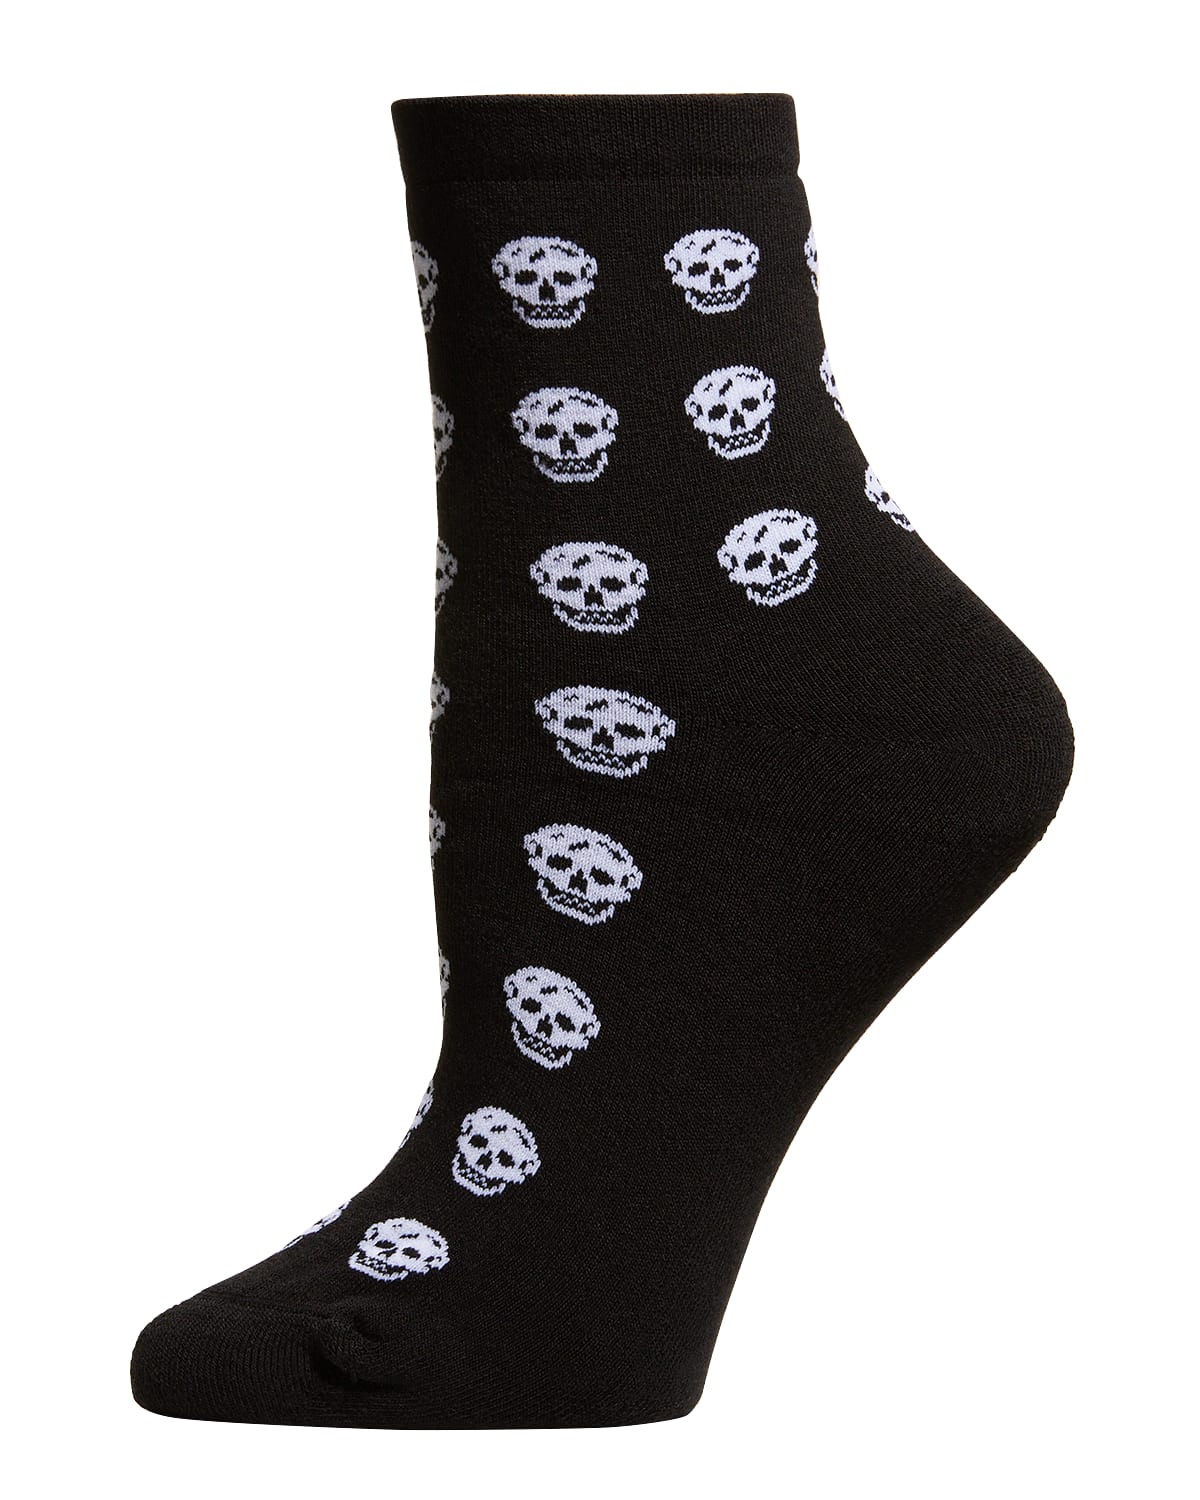 Alexander Mcqueen Allover Skull Crew Socks In Black / White